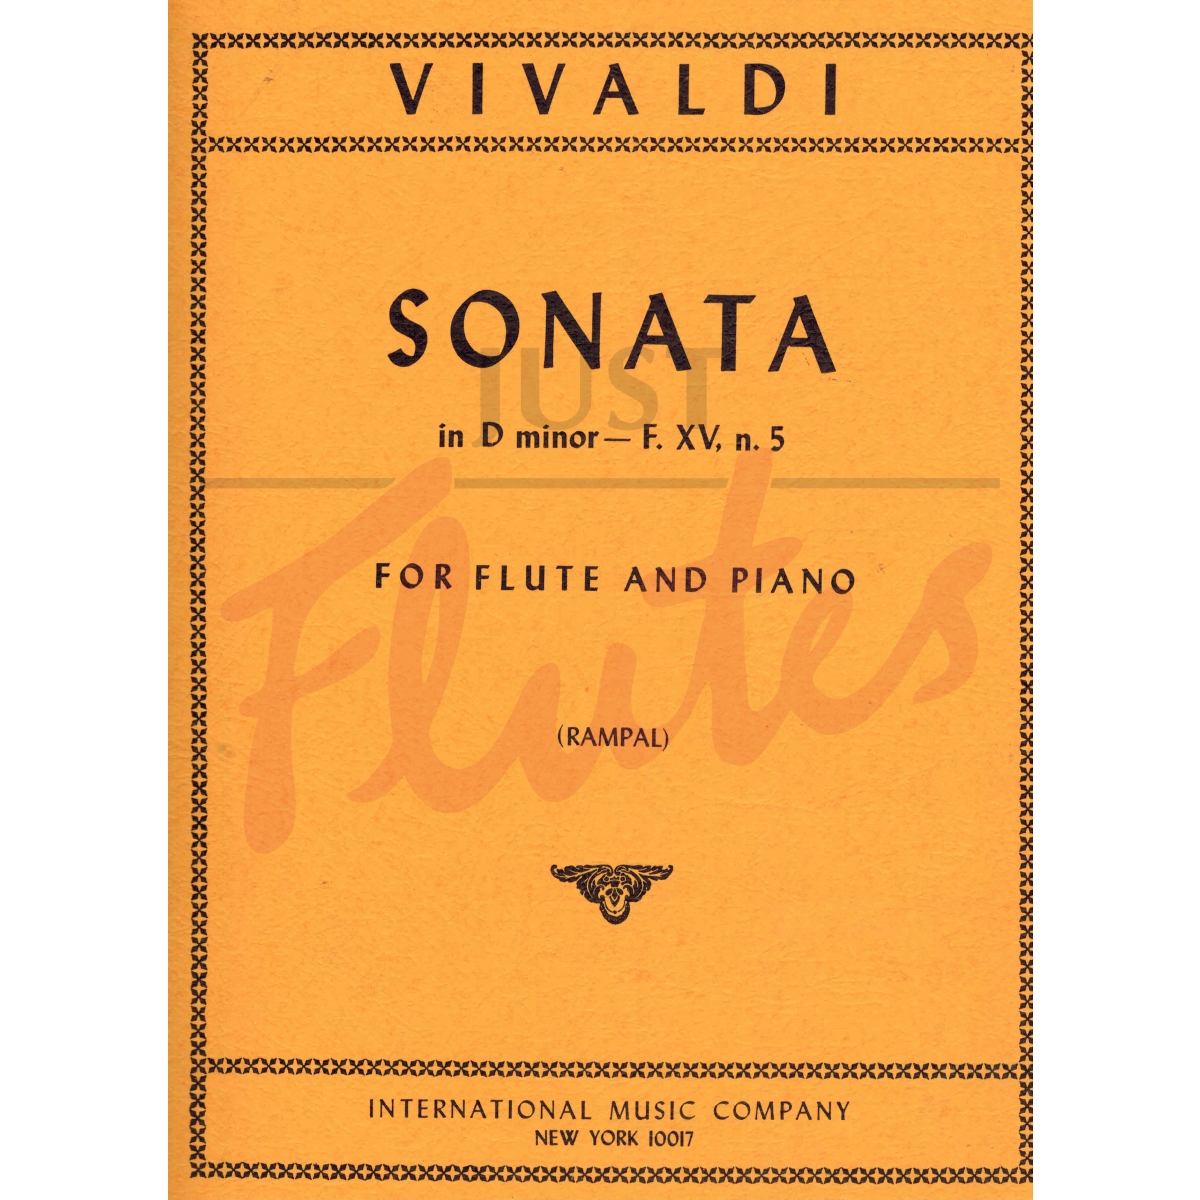 Sonata in D minor for Flute and Piano